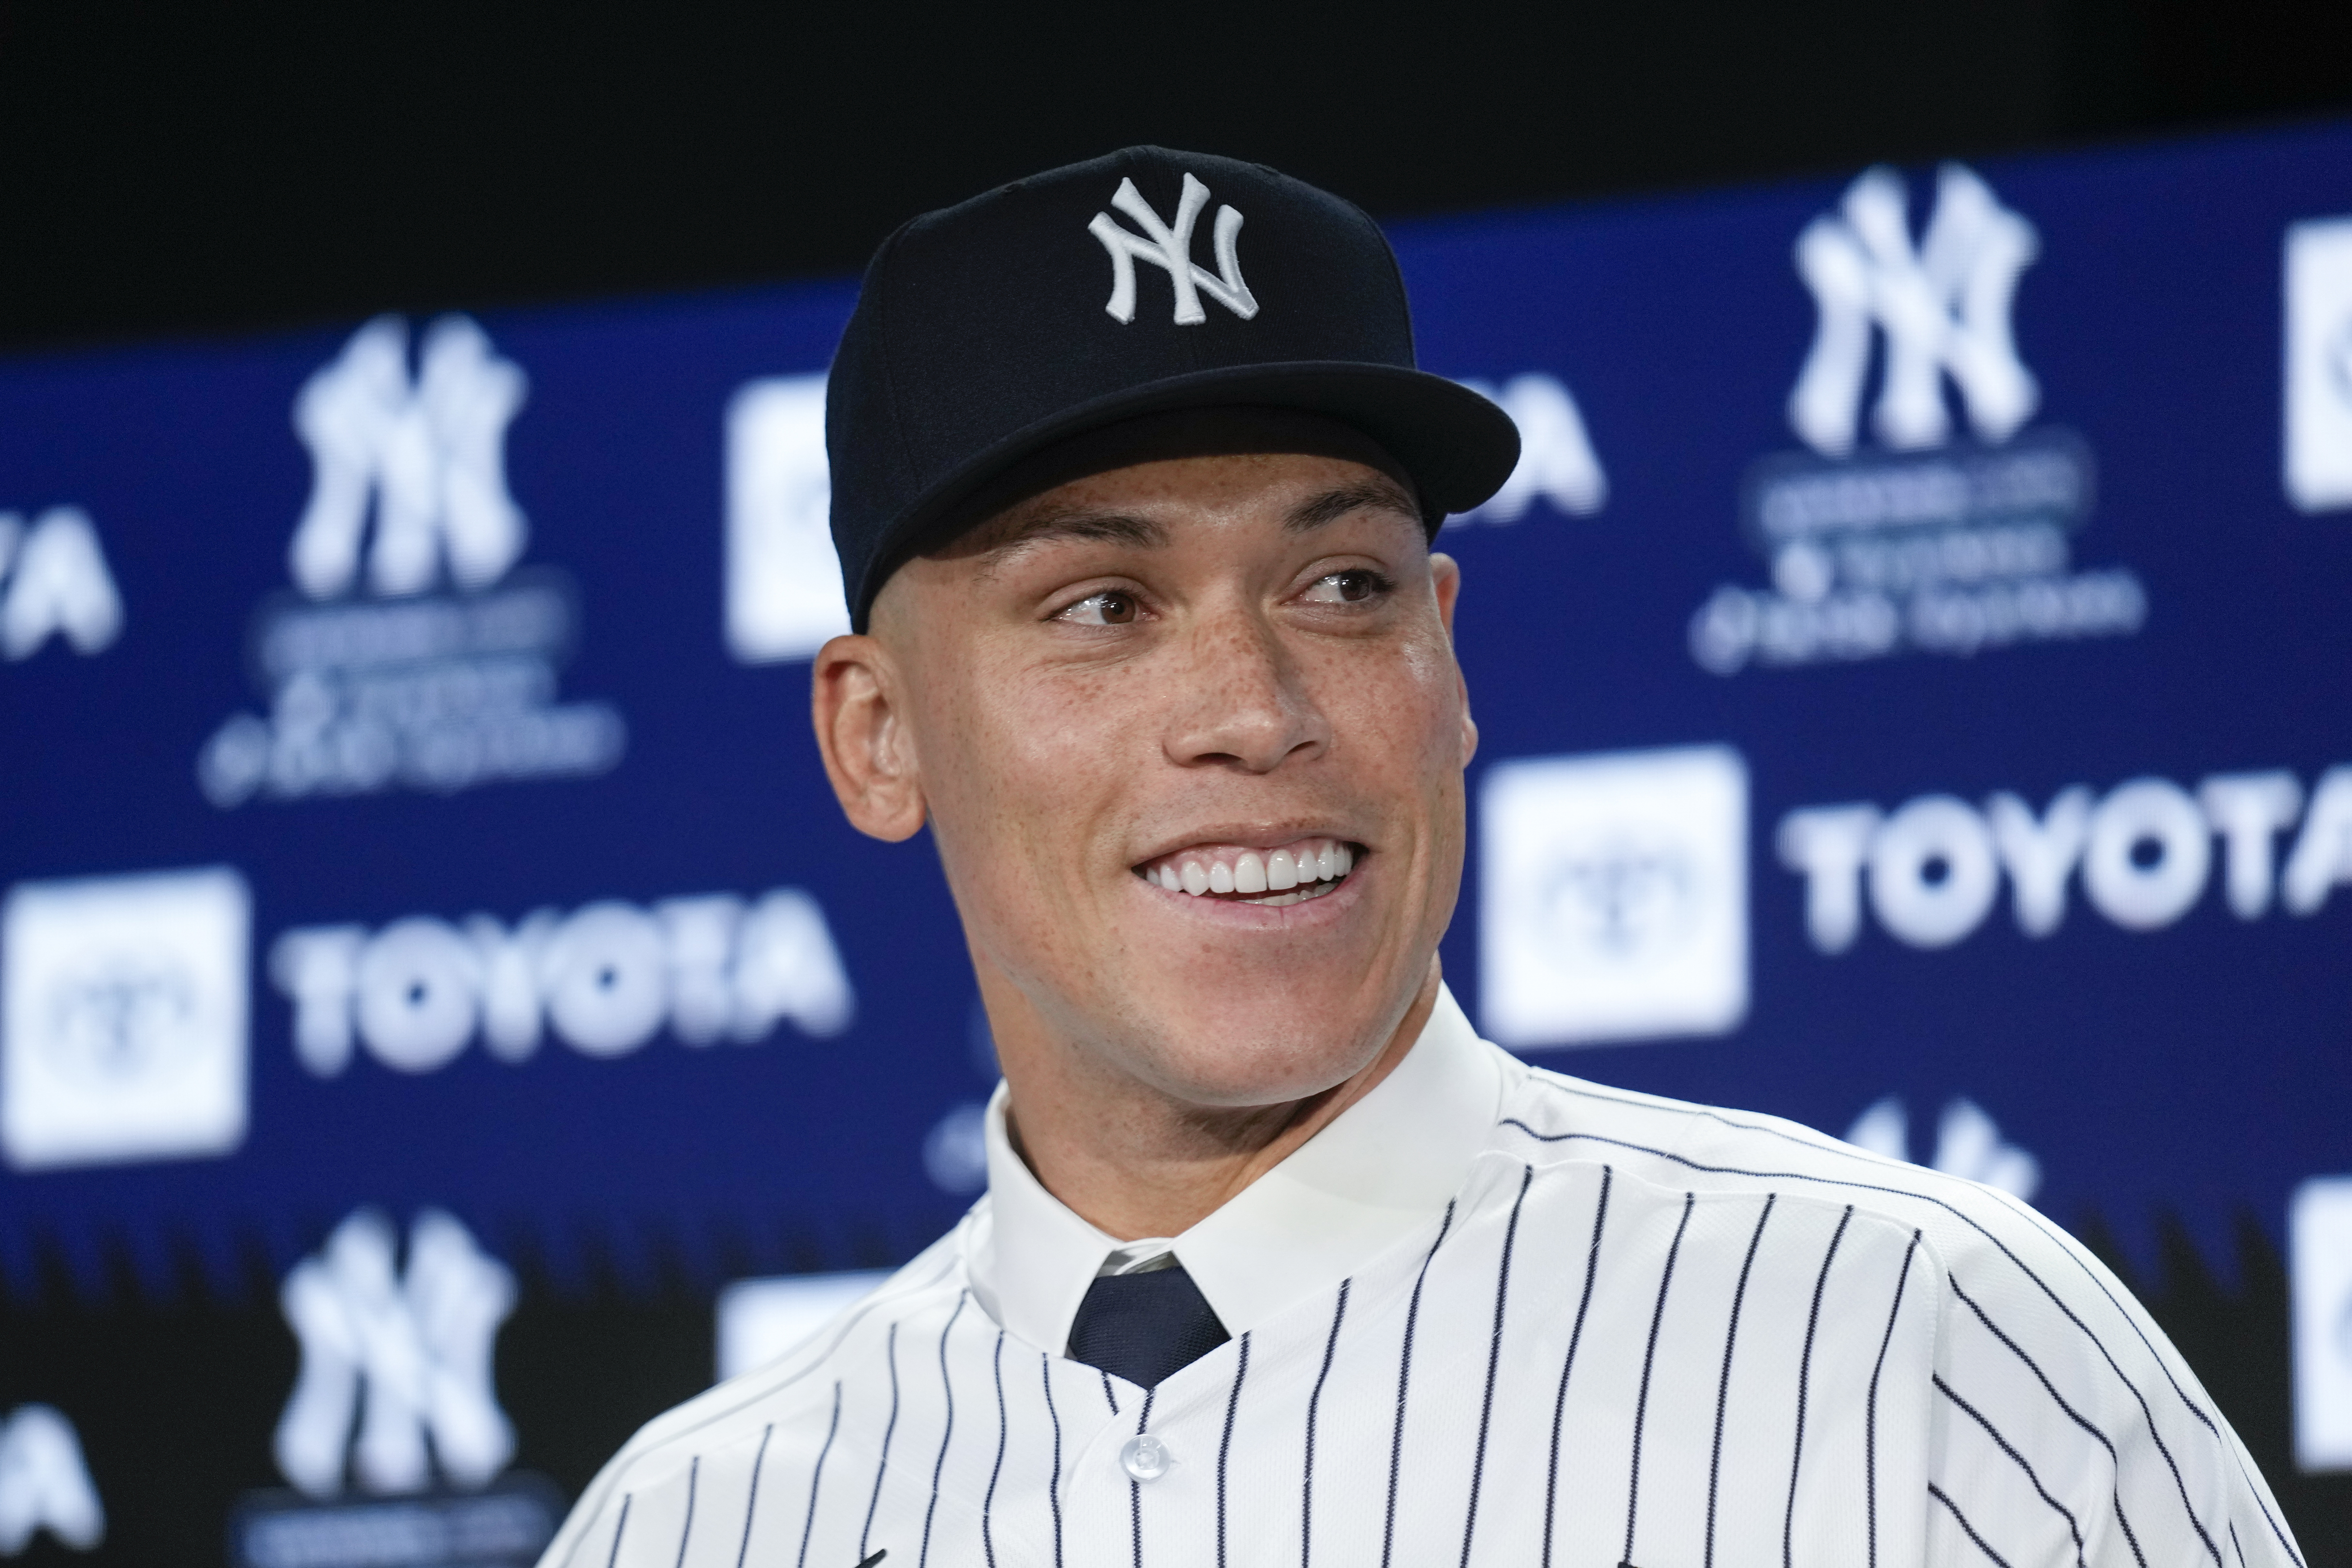 New York Yankees Star Aaron Judge Is Now a Jordan Brand Athlete